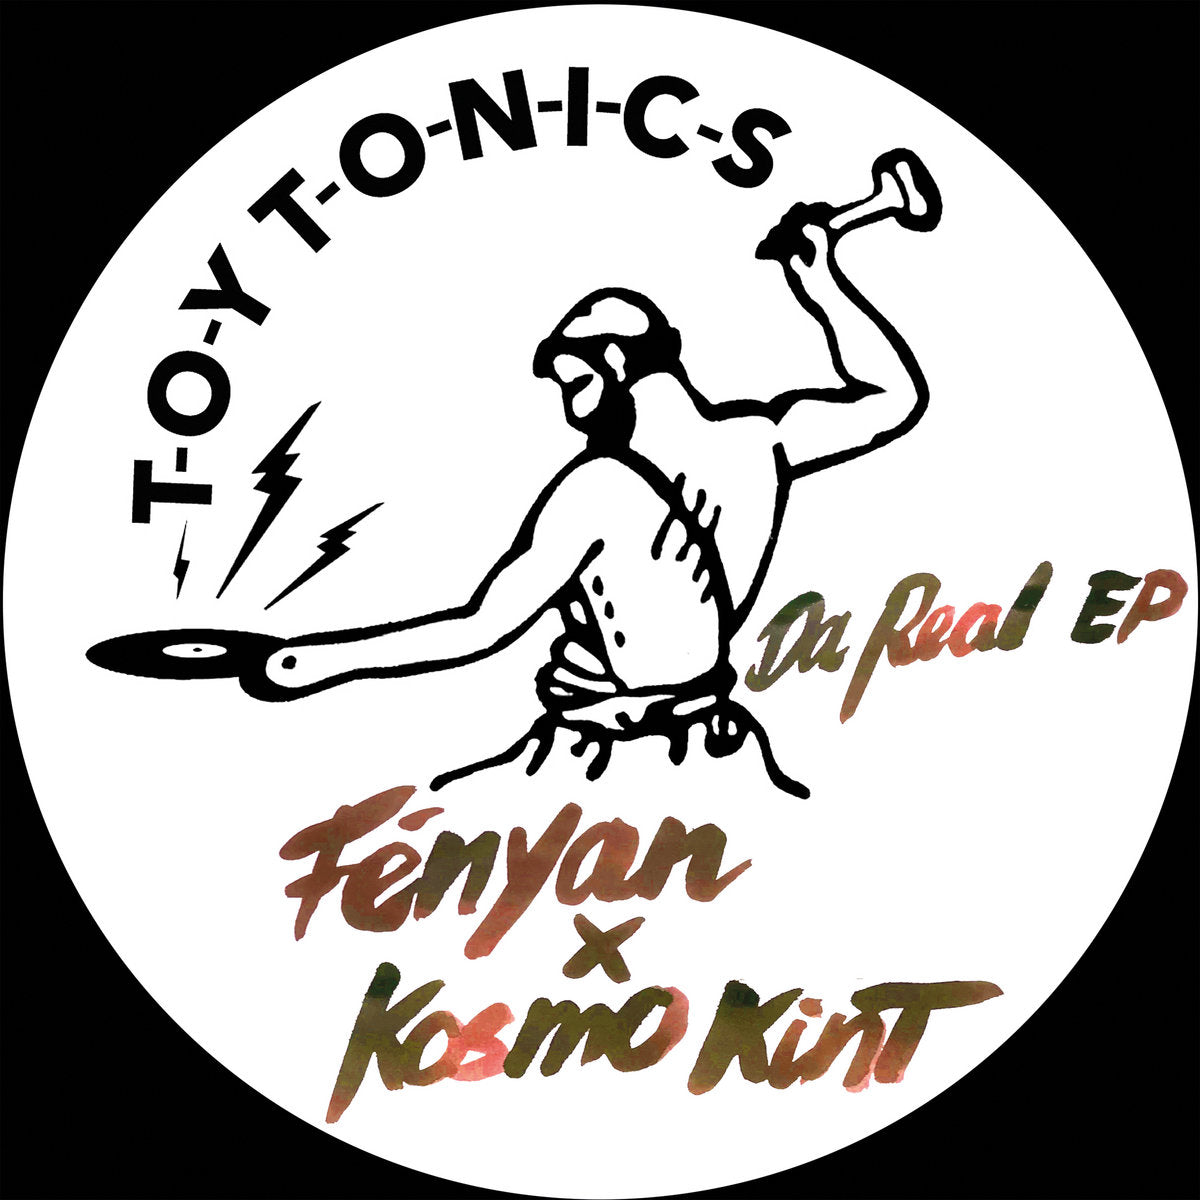 Fényan x Kosmo Kint - Da Real EP (Toy Tonics)